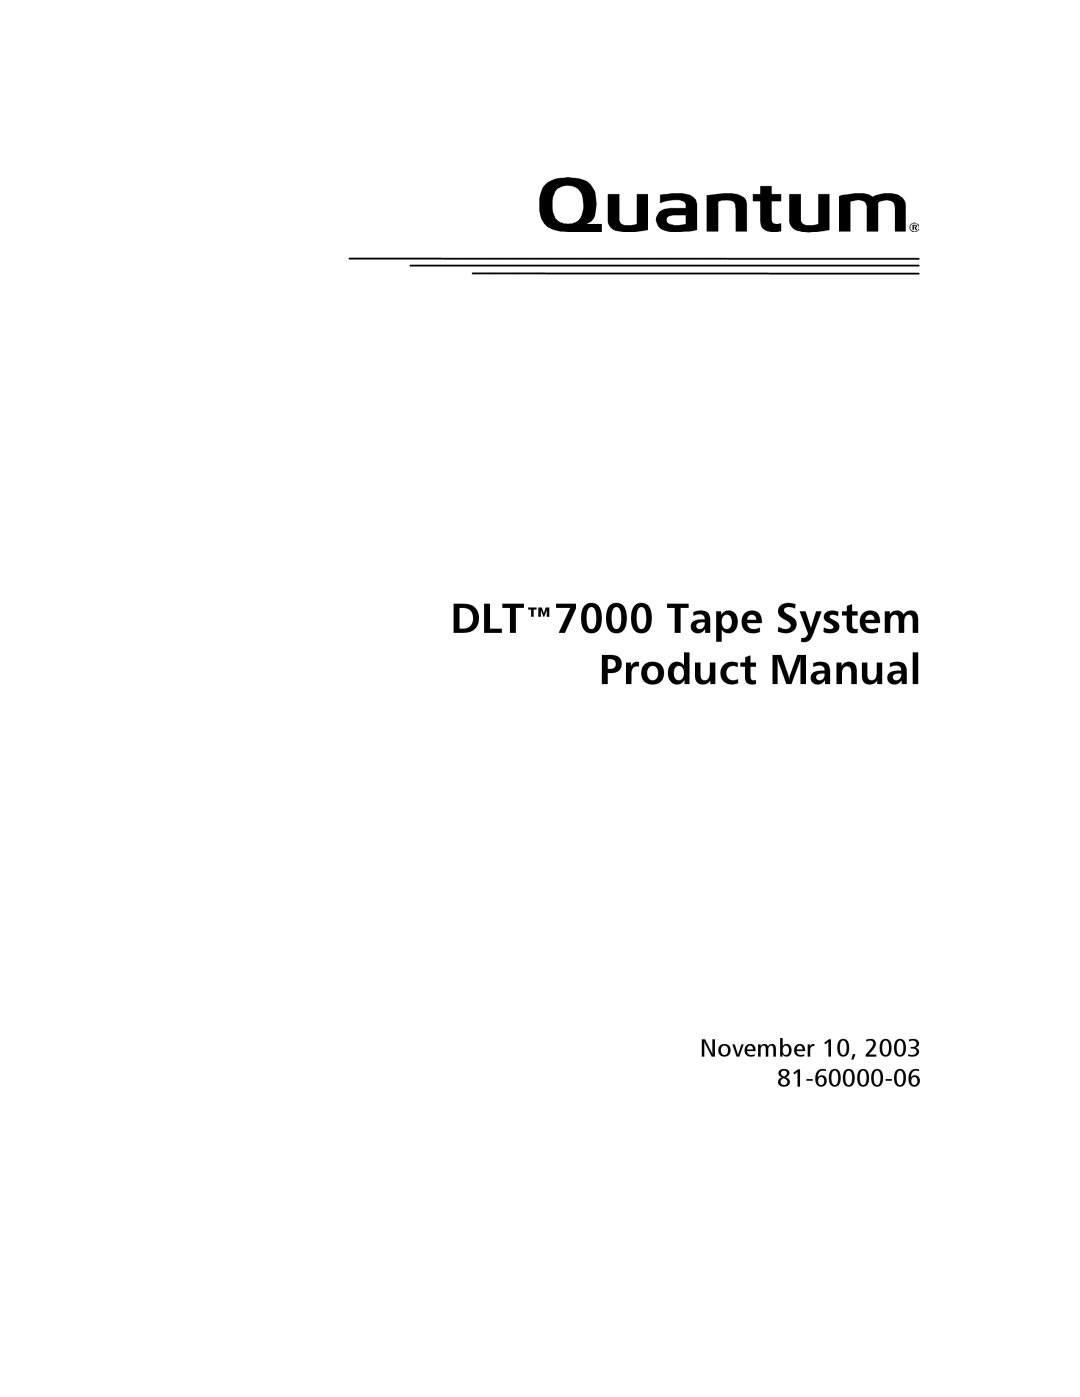 Quantum Instruments DLT 7000 manual DLT7000 Tape System Product Manual 